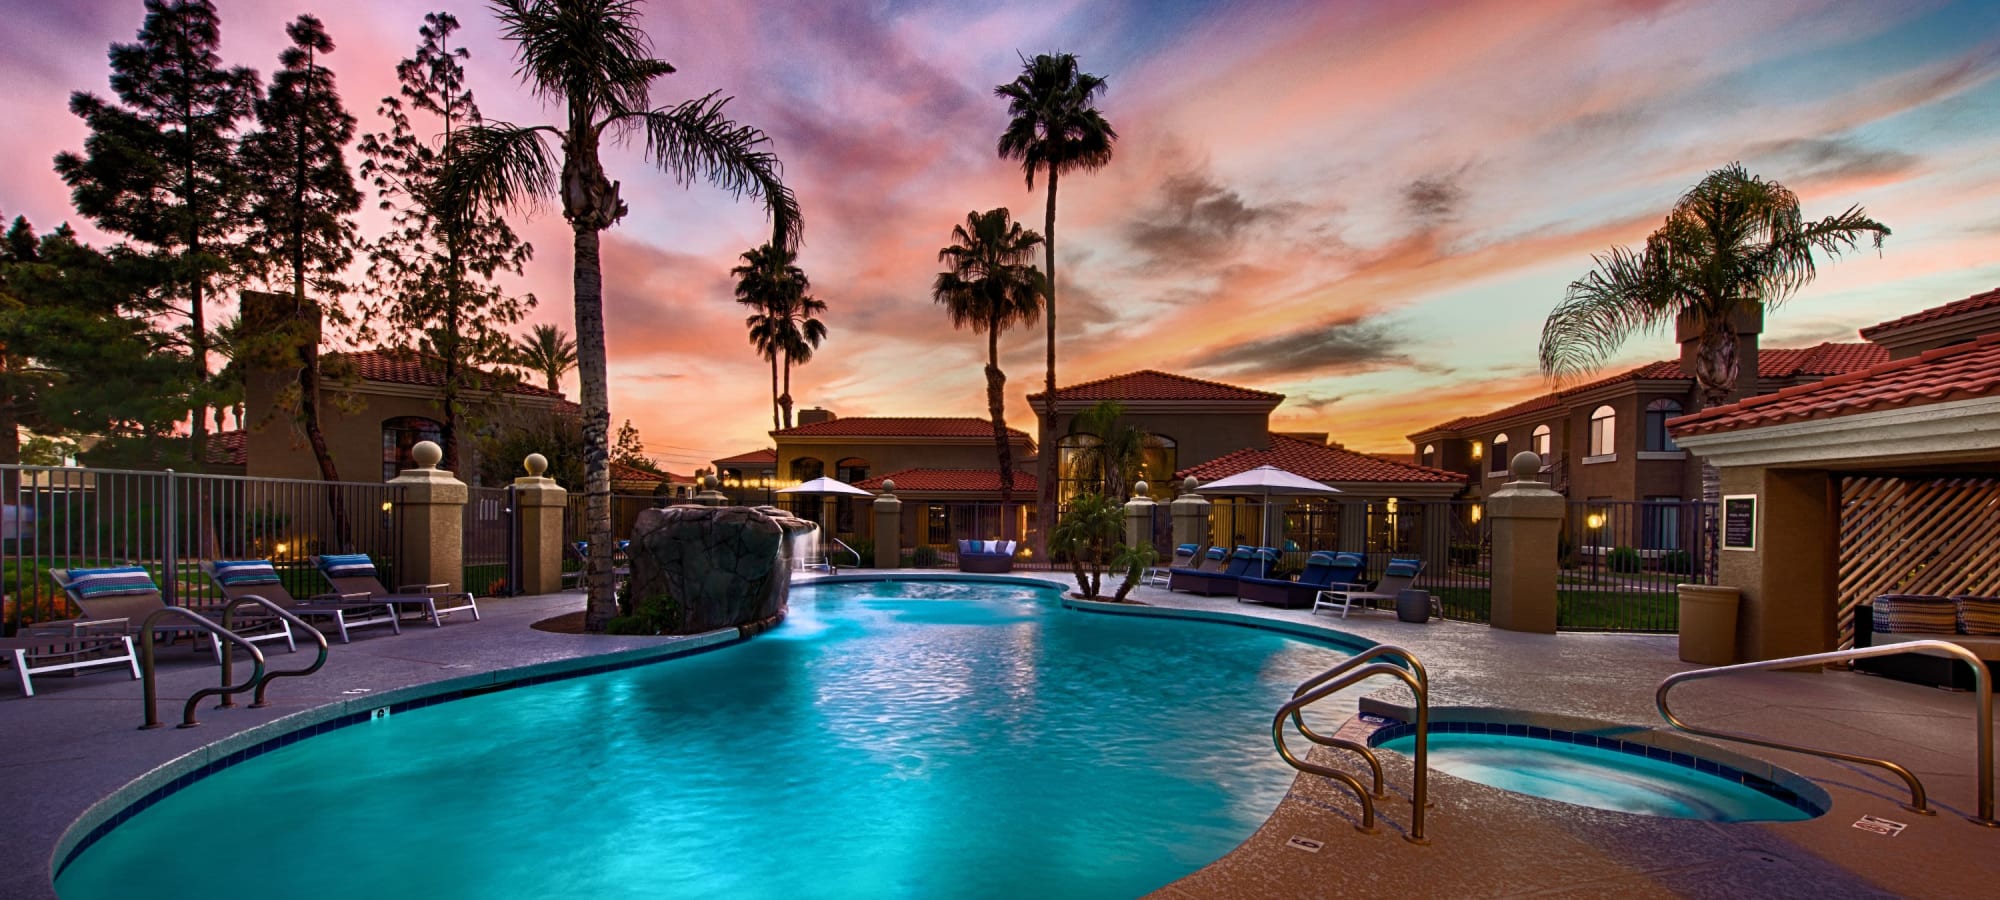 Beautiful pool at sunset at The Ventura in Chandler, Arizona